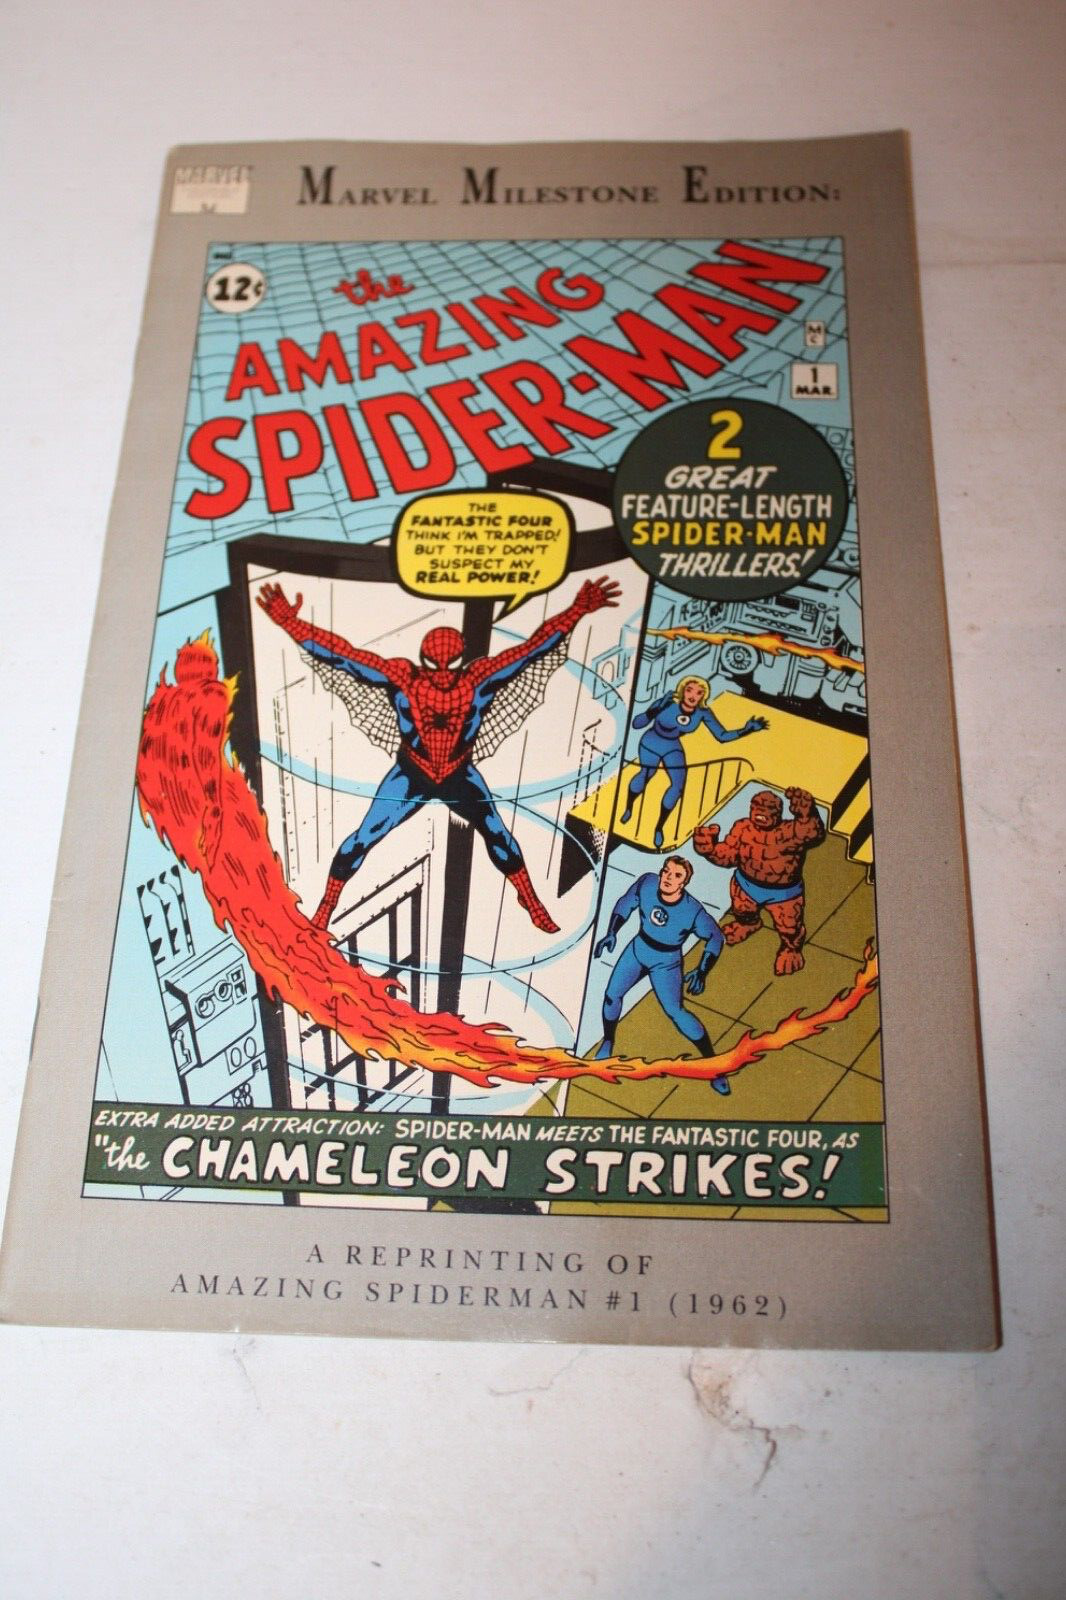 1993 Marvel Milestone Edition Amazing Spider-Man #1 Reprint